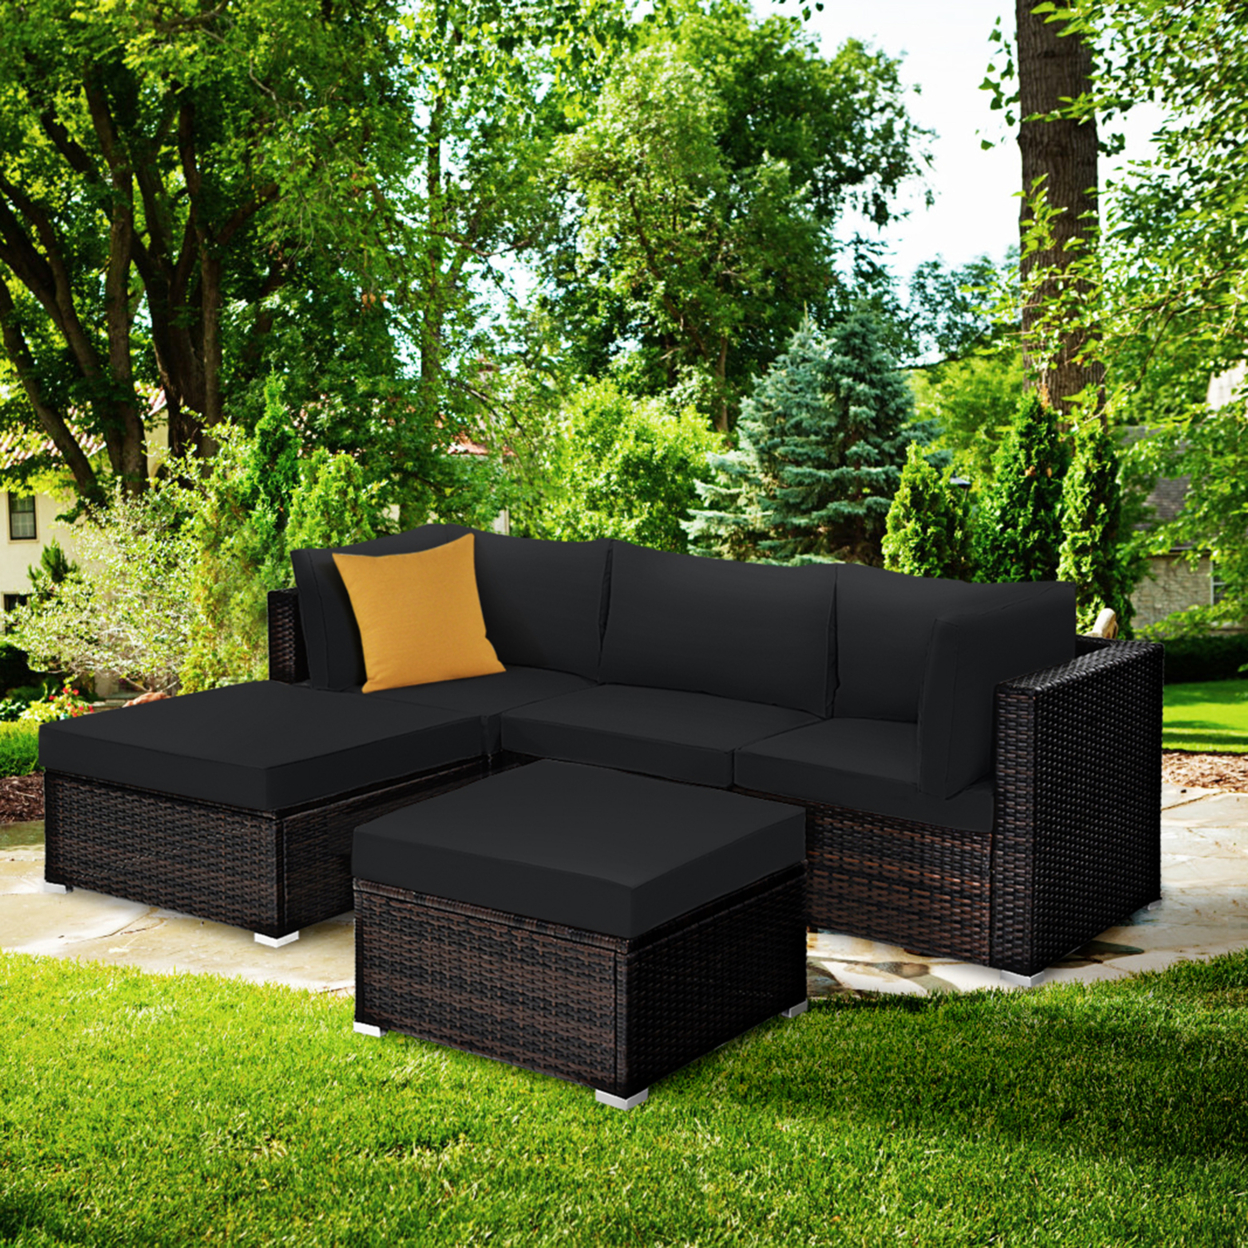 5PCS Rattan Patio Conversation Set Outdoor Furniture Set W/ Black Cushions